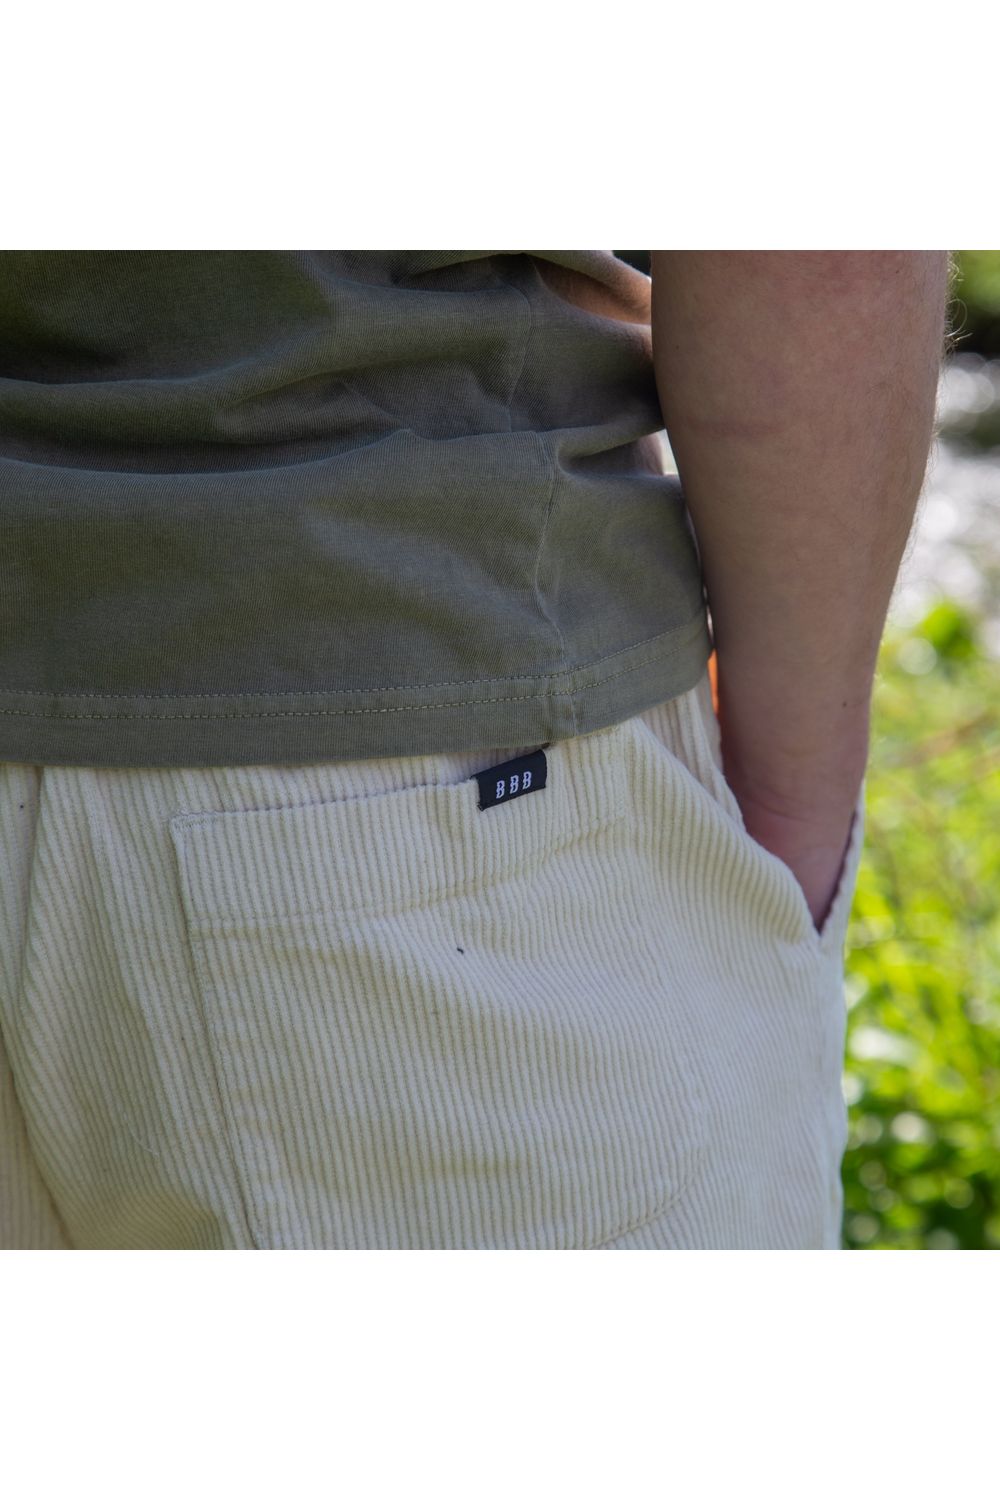 Bamboobay cord shorts in sand yellow back pocket view